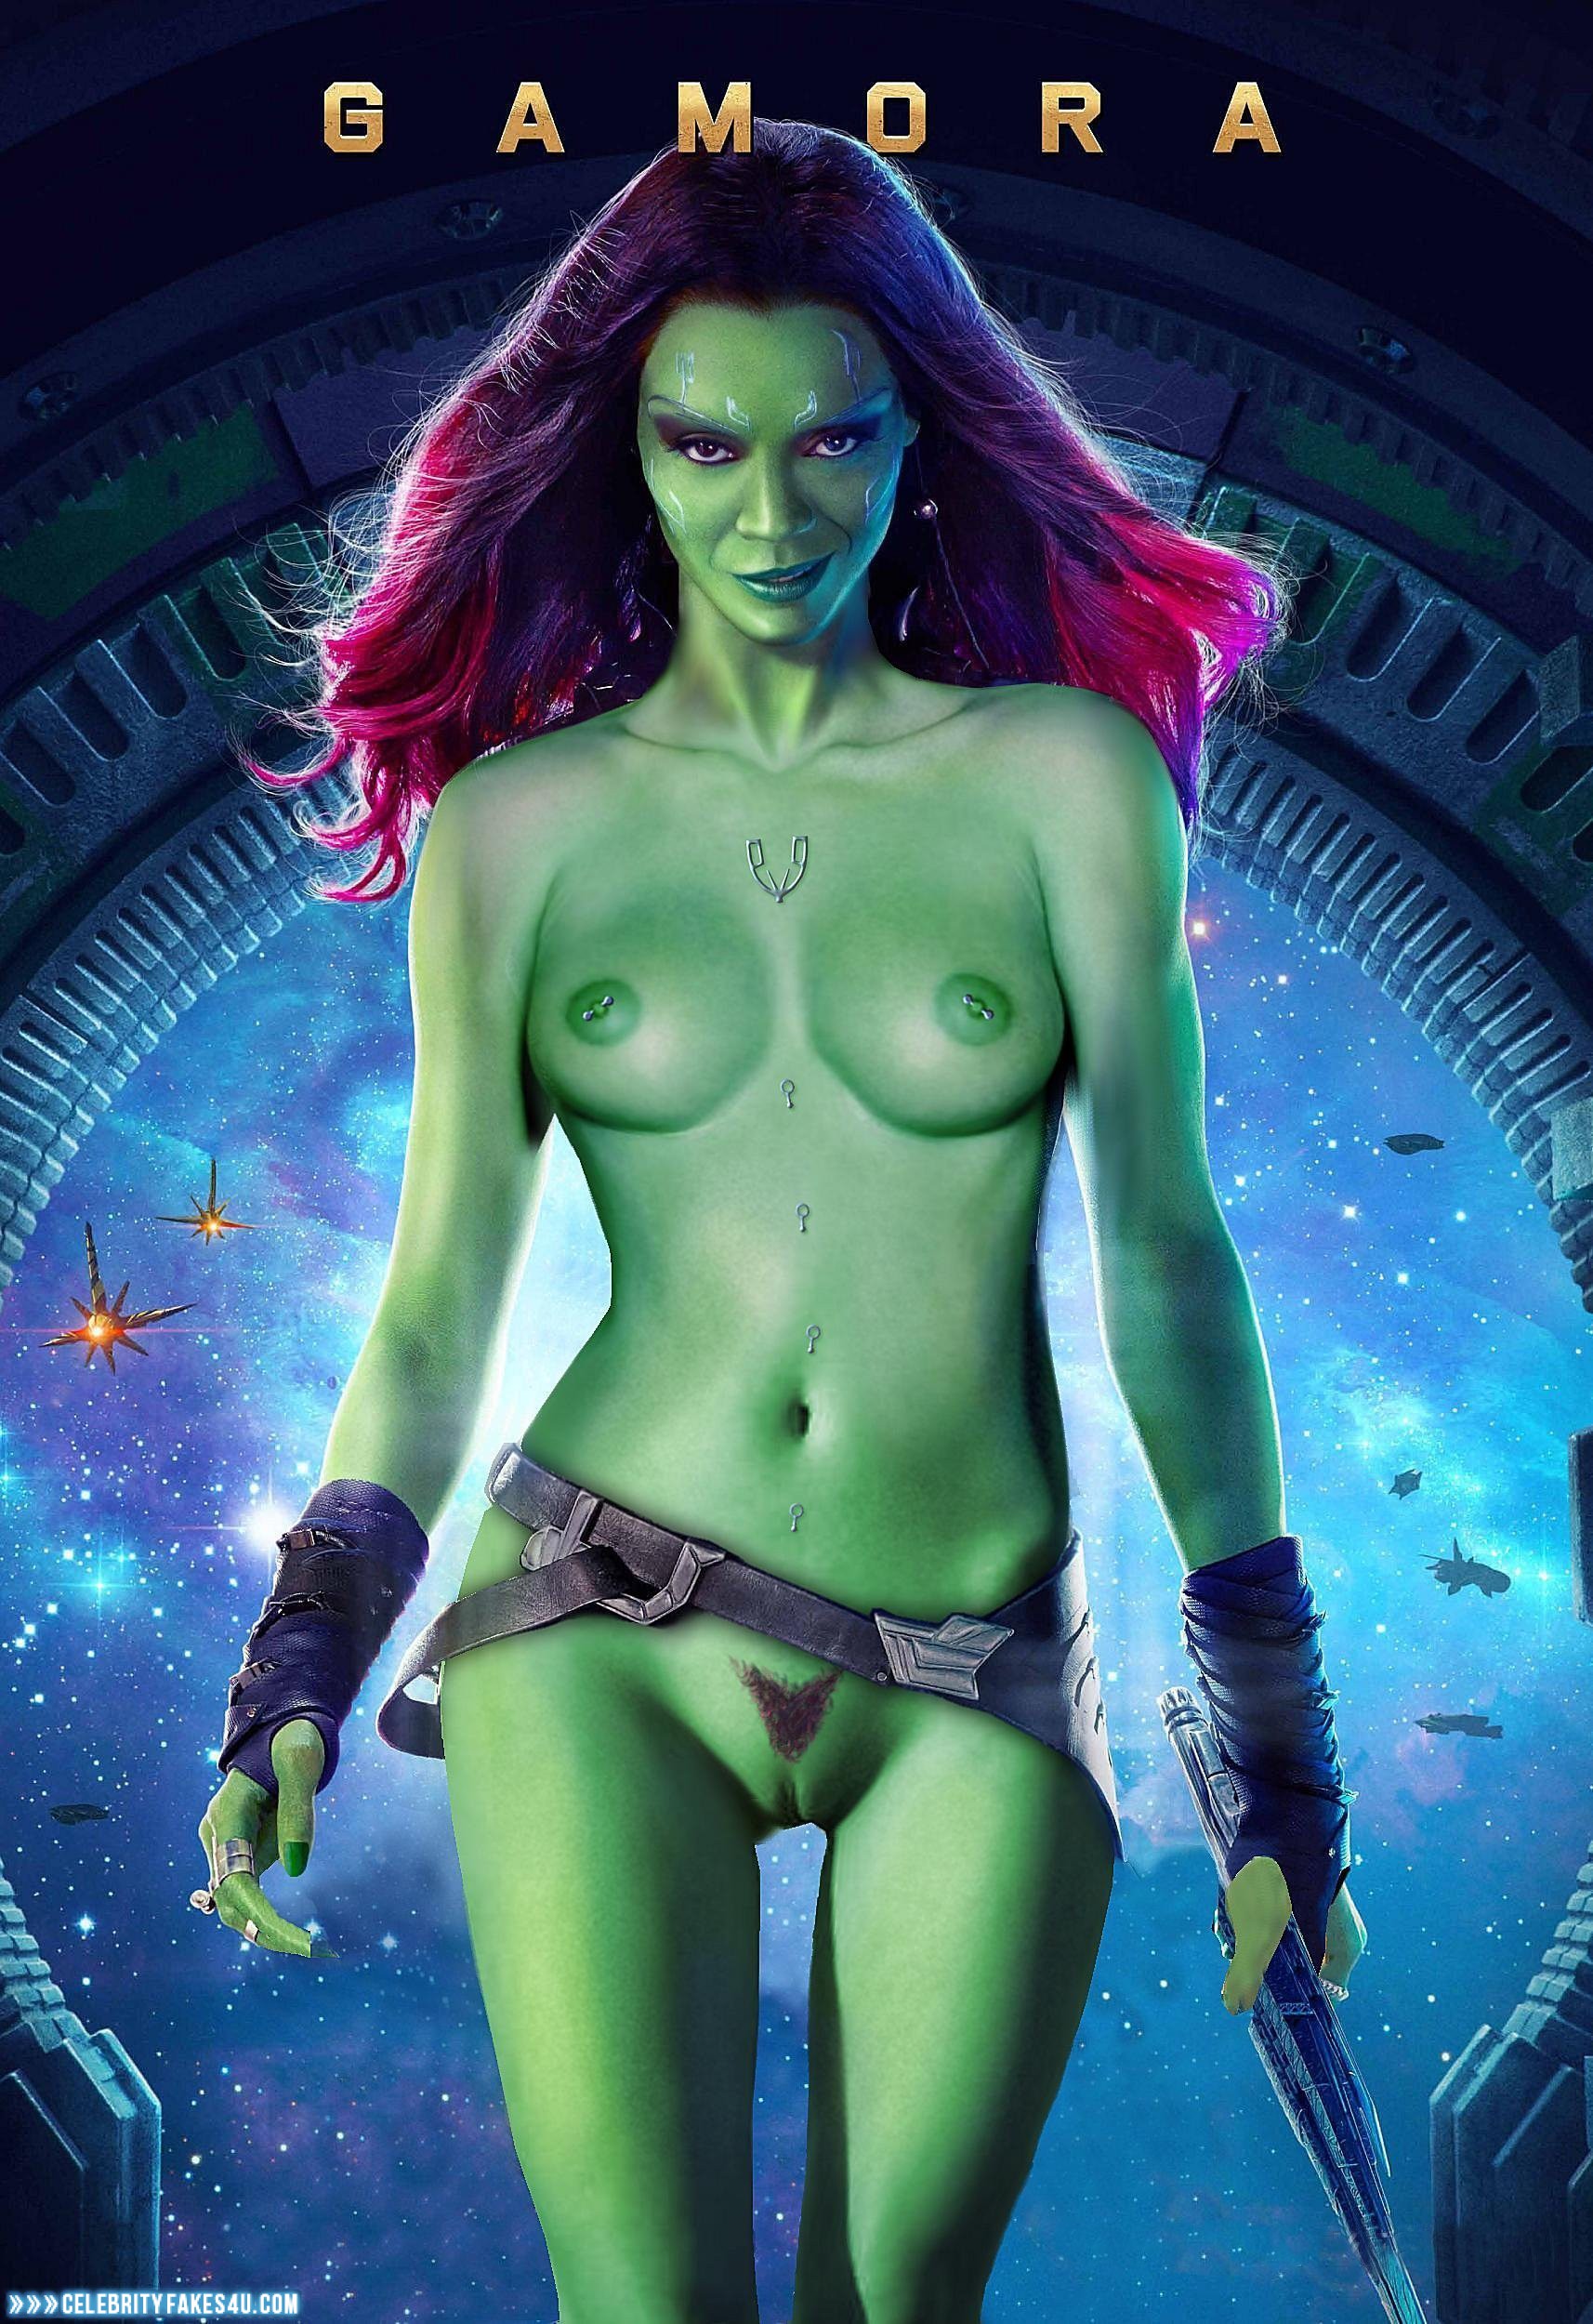 Zoe Saldana Guardians Of The Galaxy Nude Body 001 Celebrity Fakes 4u